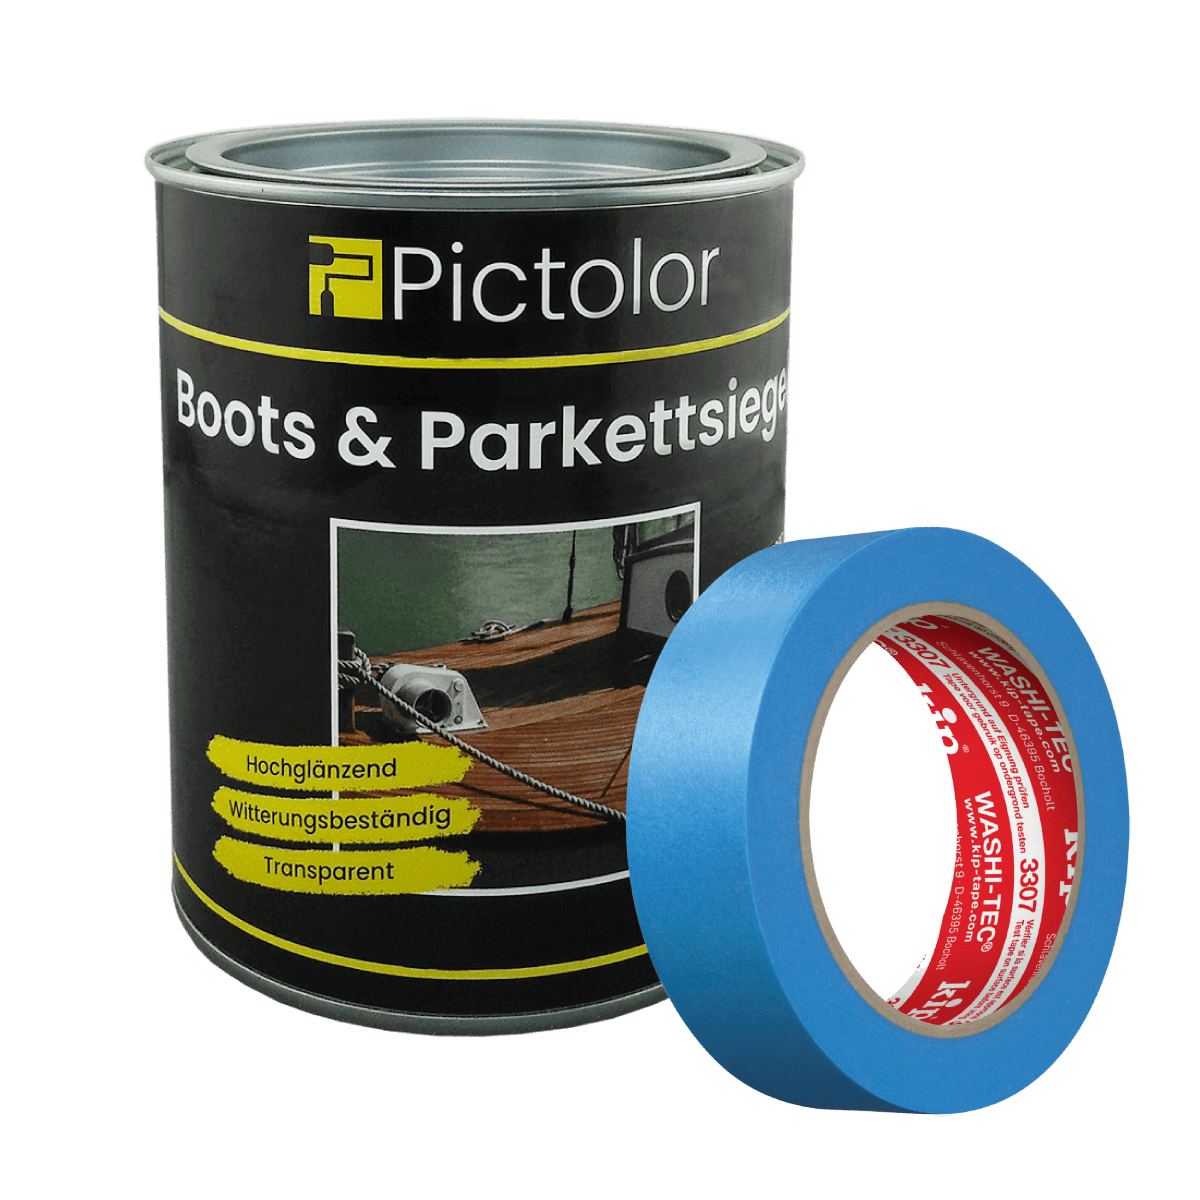 Pictolor® Boots & Parkettsiegel plus Kip 3307 WASHI-TEC® für Außen von FPT Group GmbH